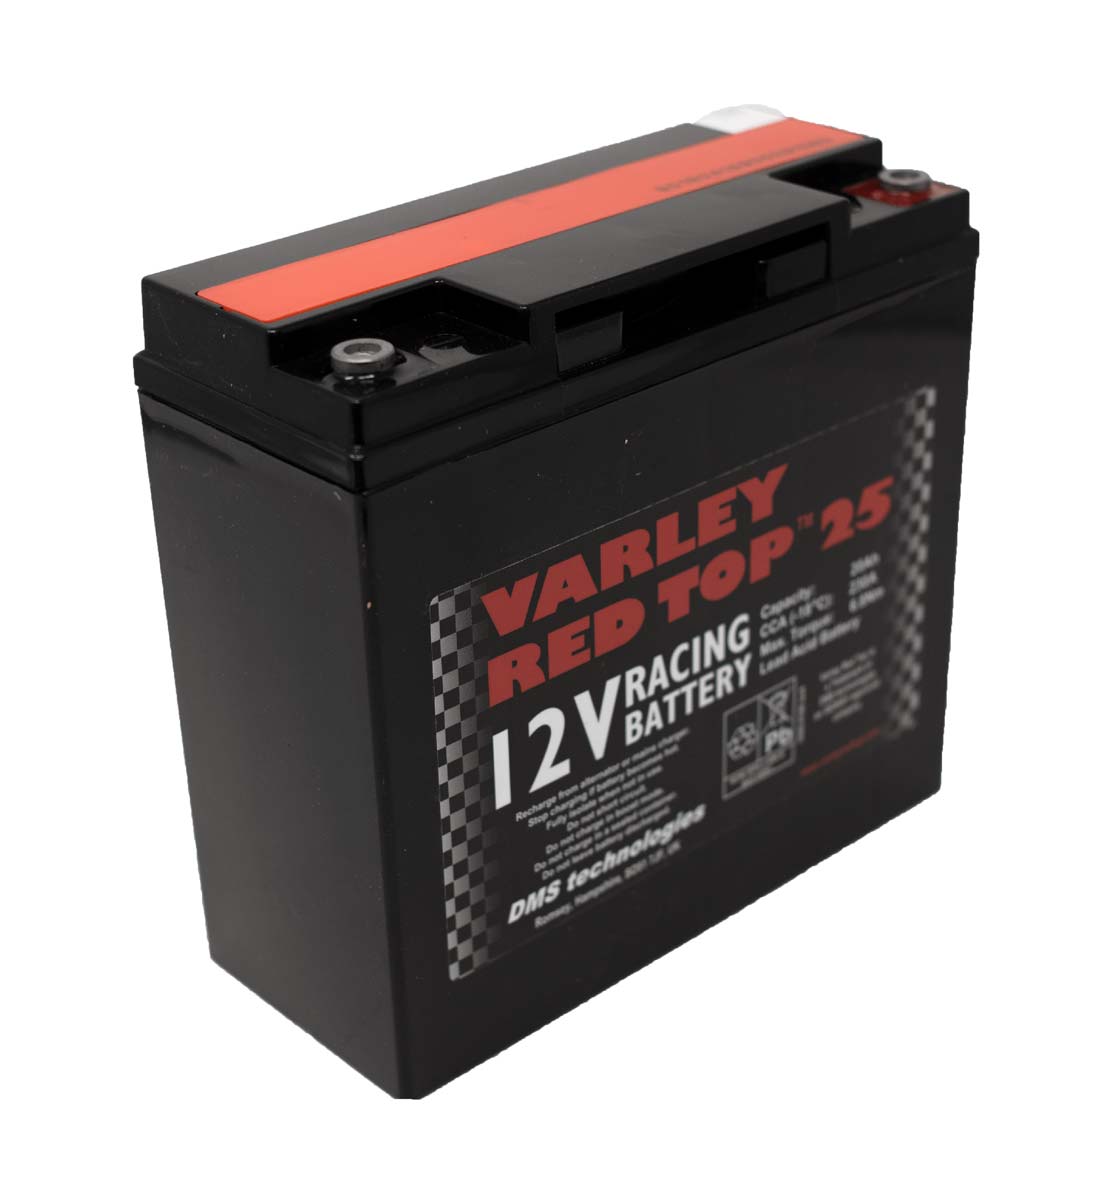 Varley Red Top 25 AGM Racing Battery - 12V 20Ah